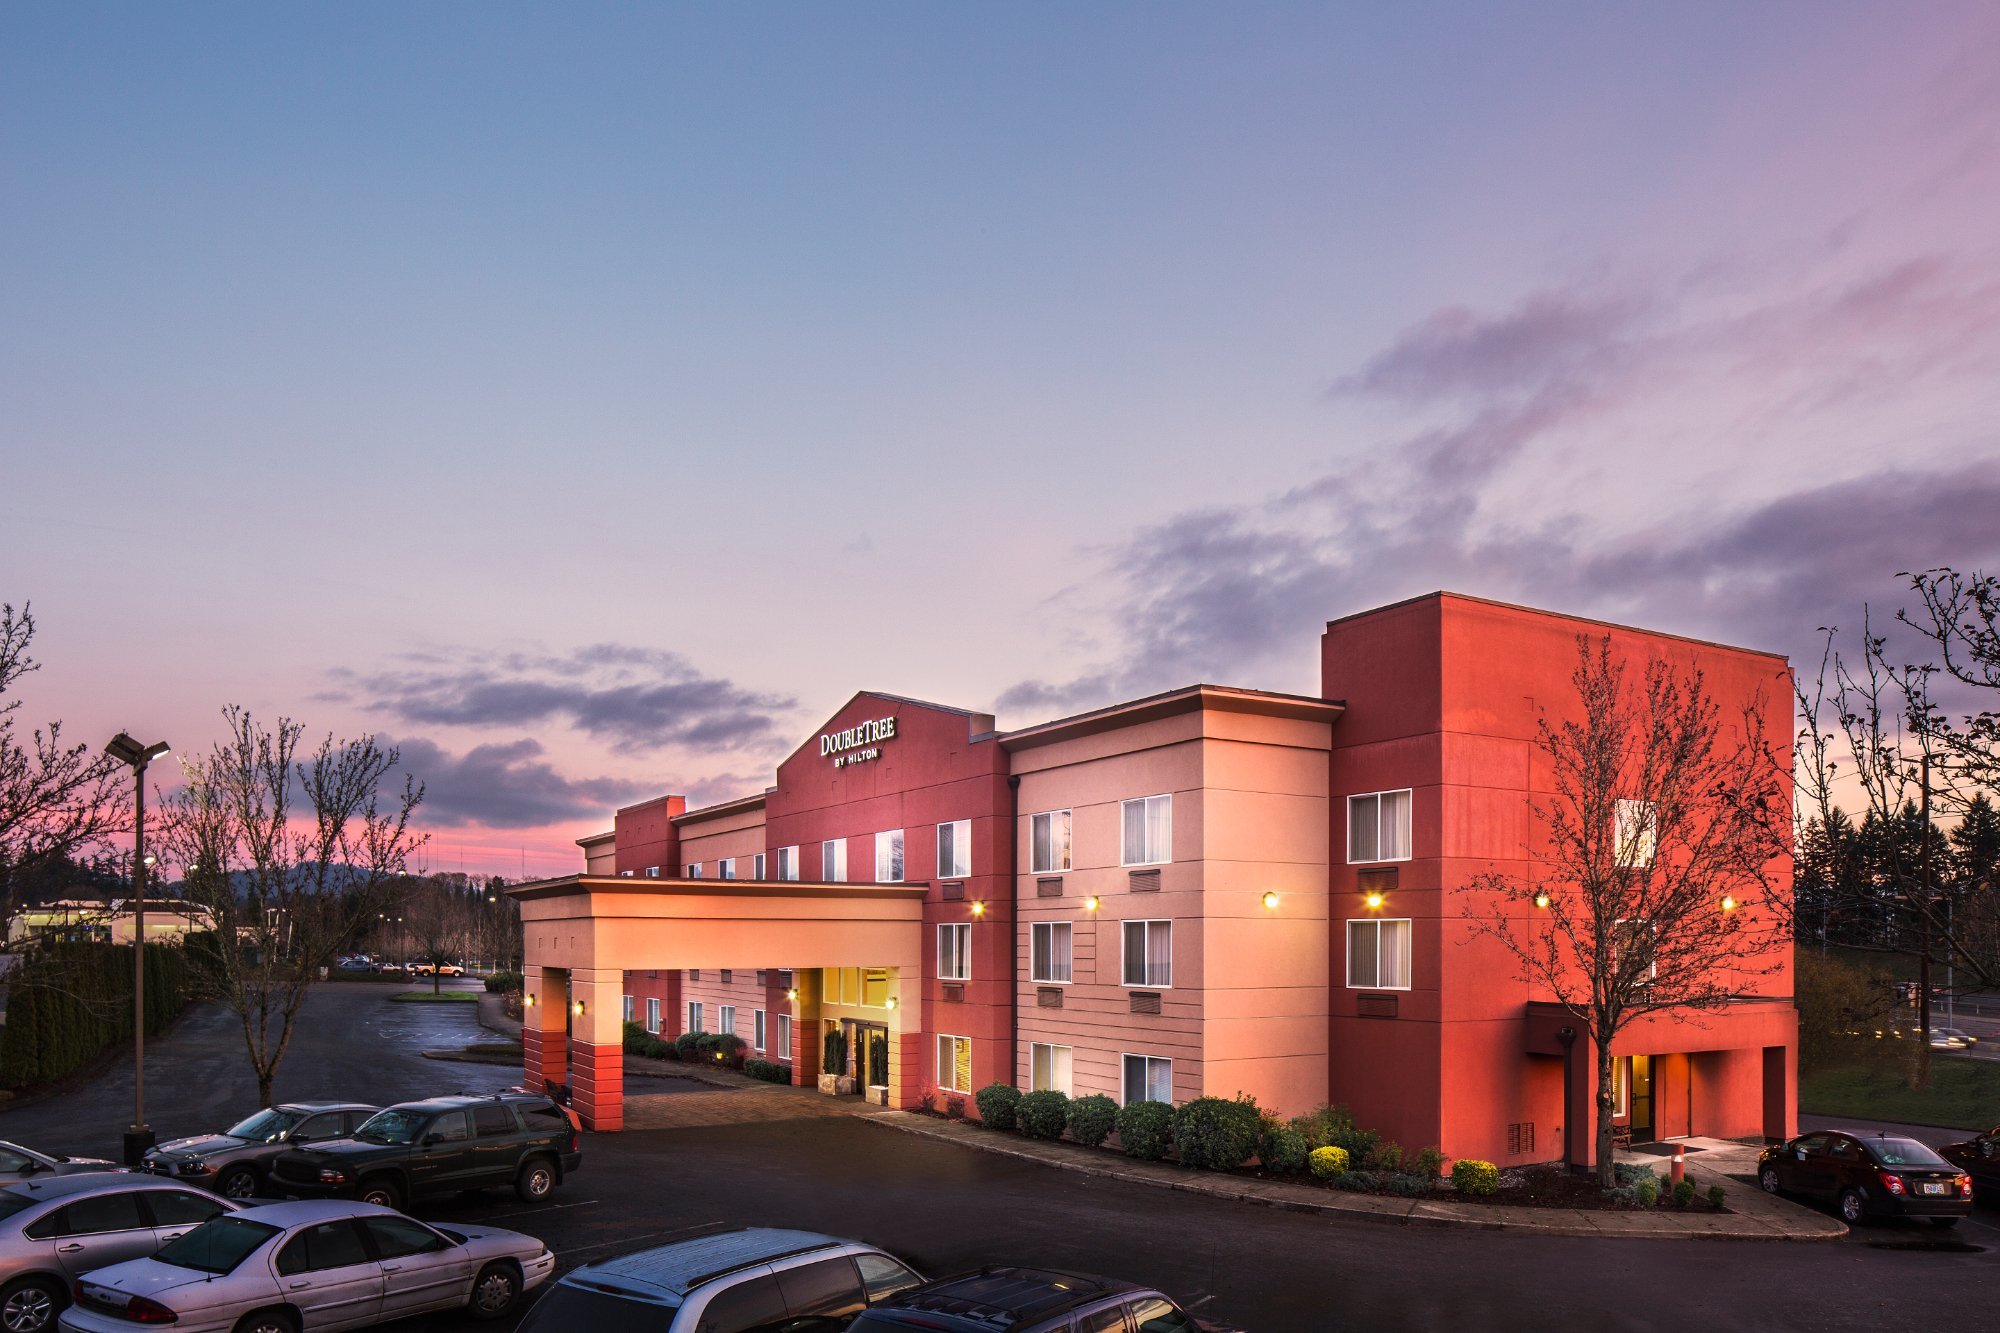 Photo of DoubleTree by Hilton Hotel Portland - Beaverton, Beaverton, OR